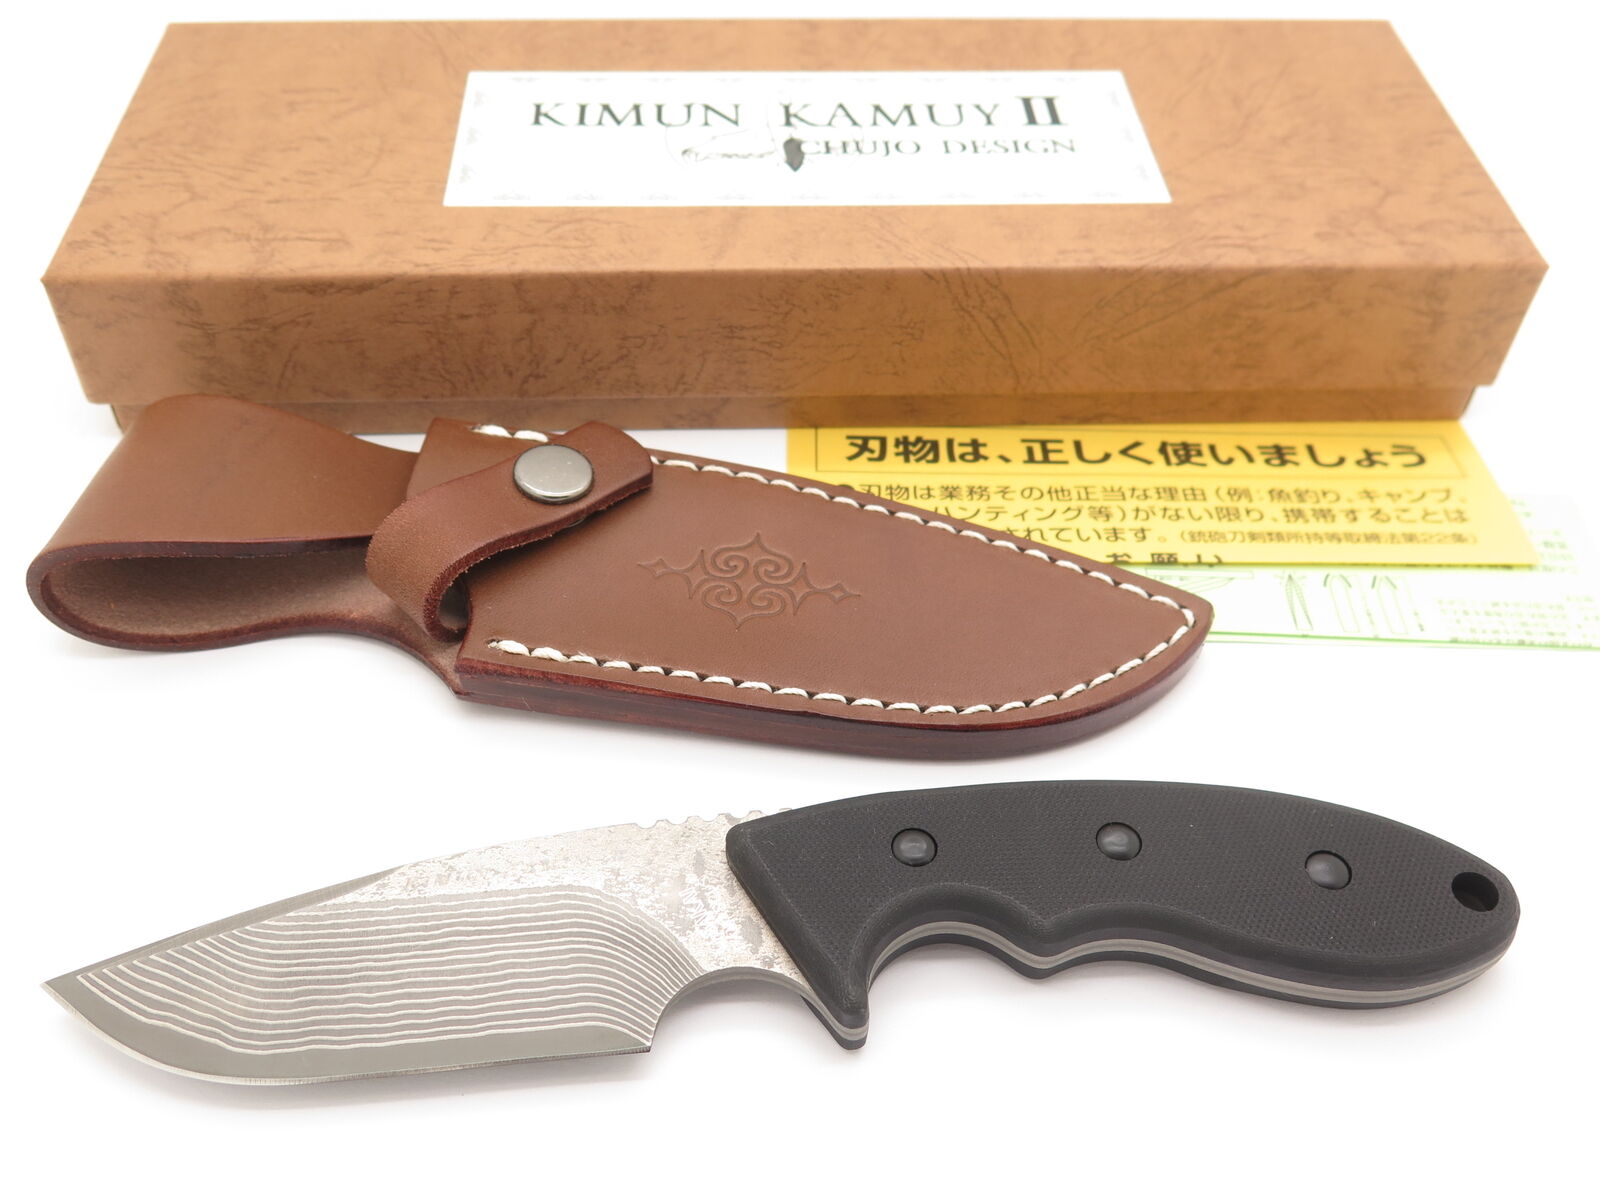 G. Sakai Seki Japan Kimun Kamuy II Chujo Damascus Fixed Blade Hunting Knife